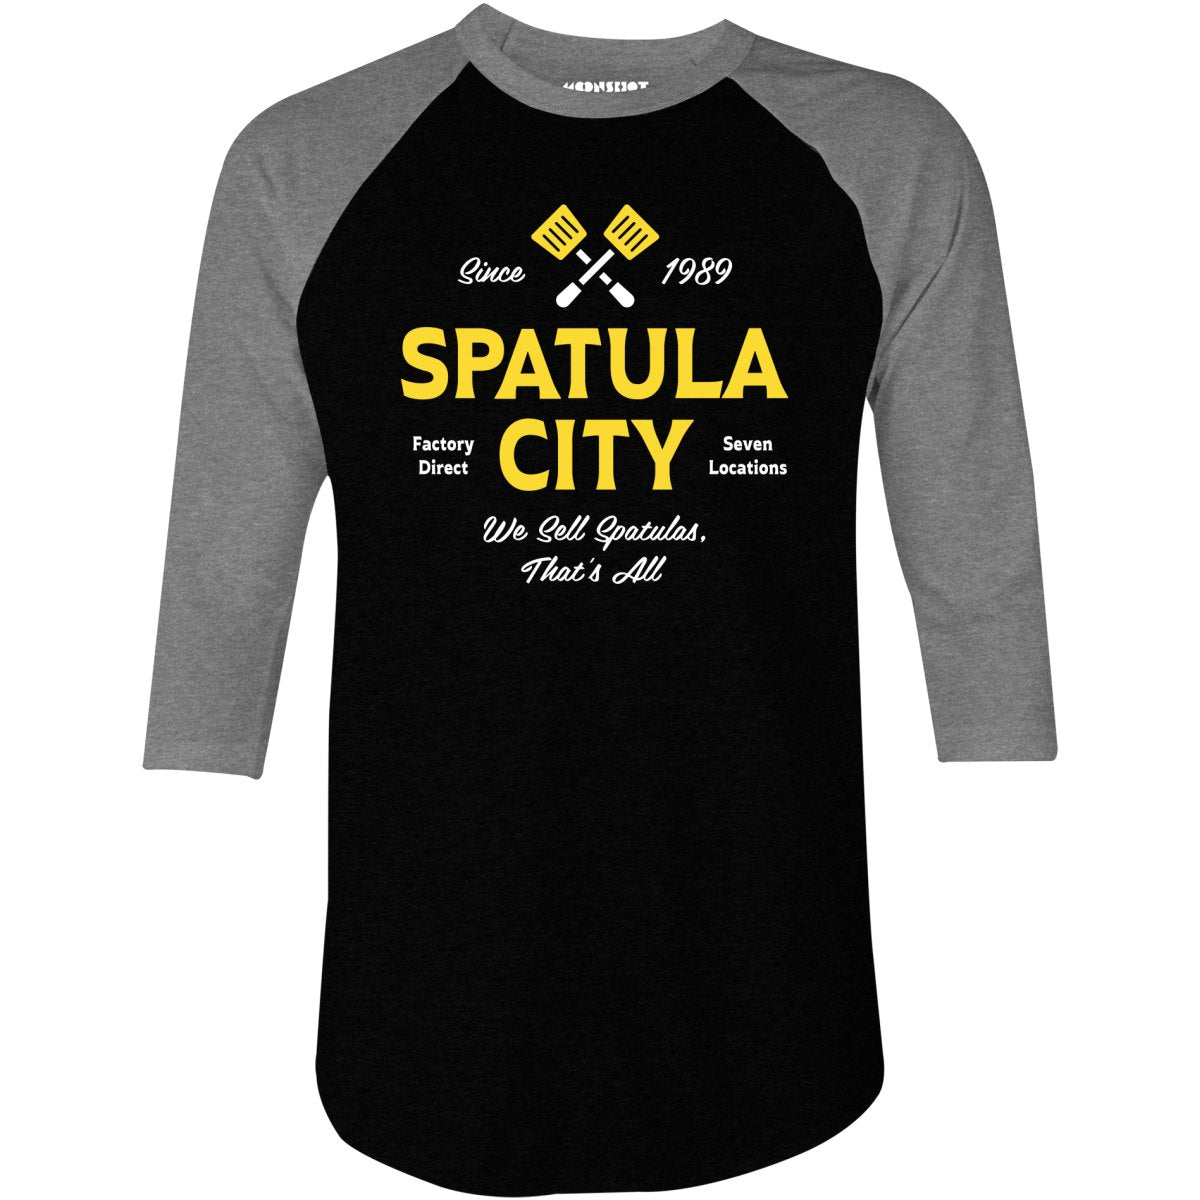 Spatula City - 3/4 Sleeve Raglan T-Shirt